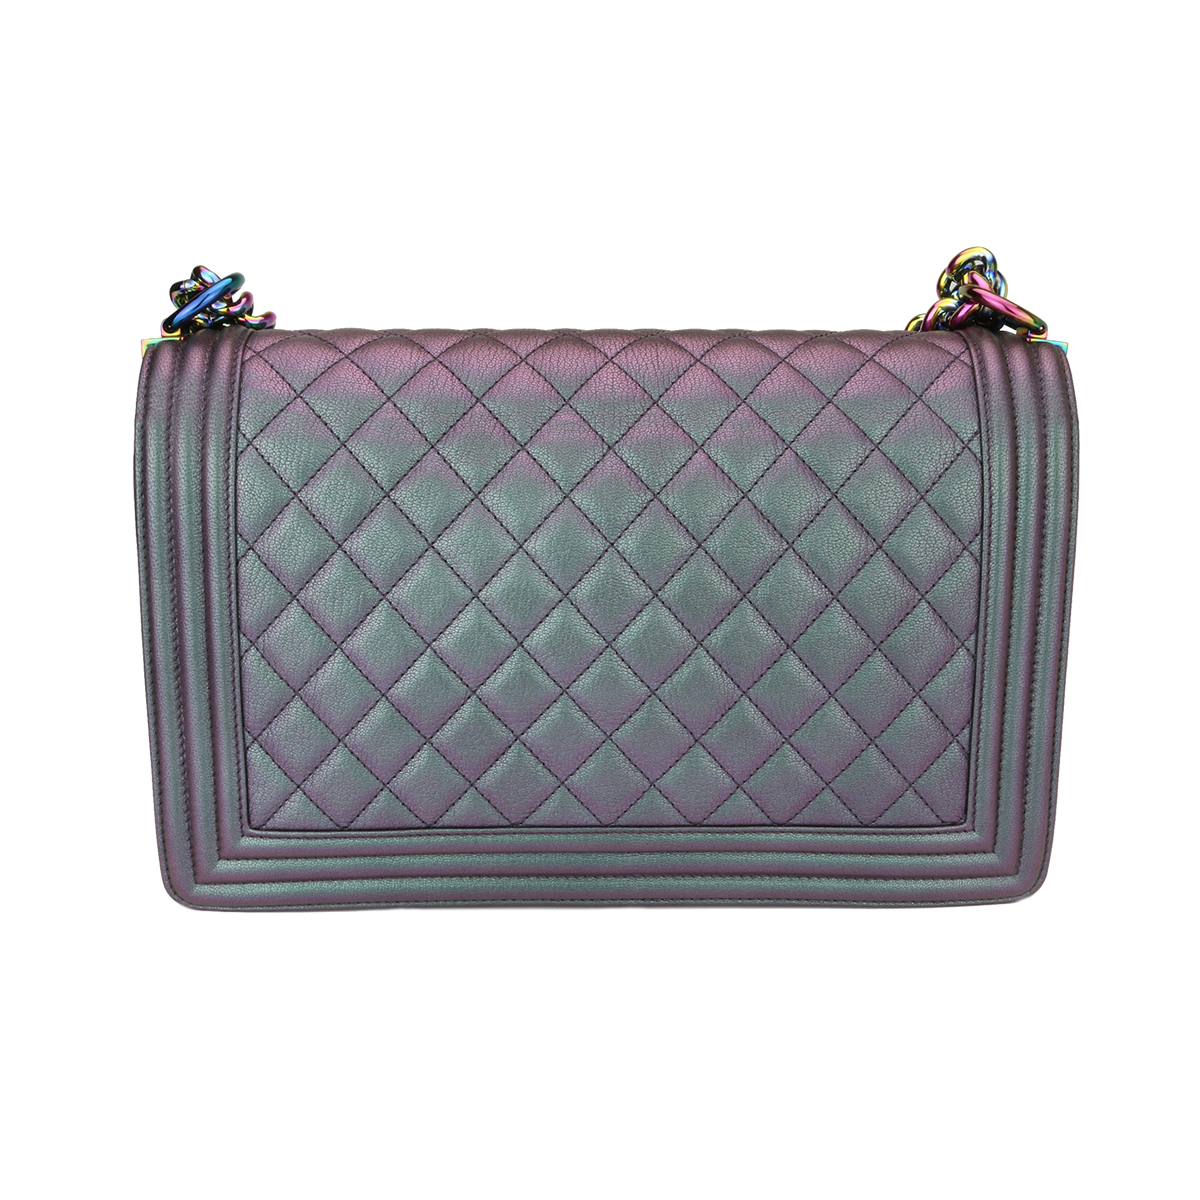 Chanel iridescent purple flap